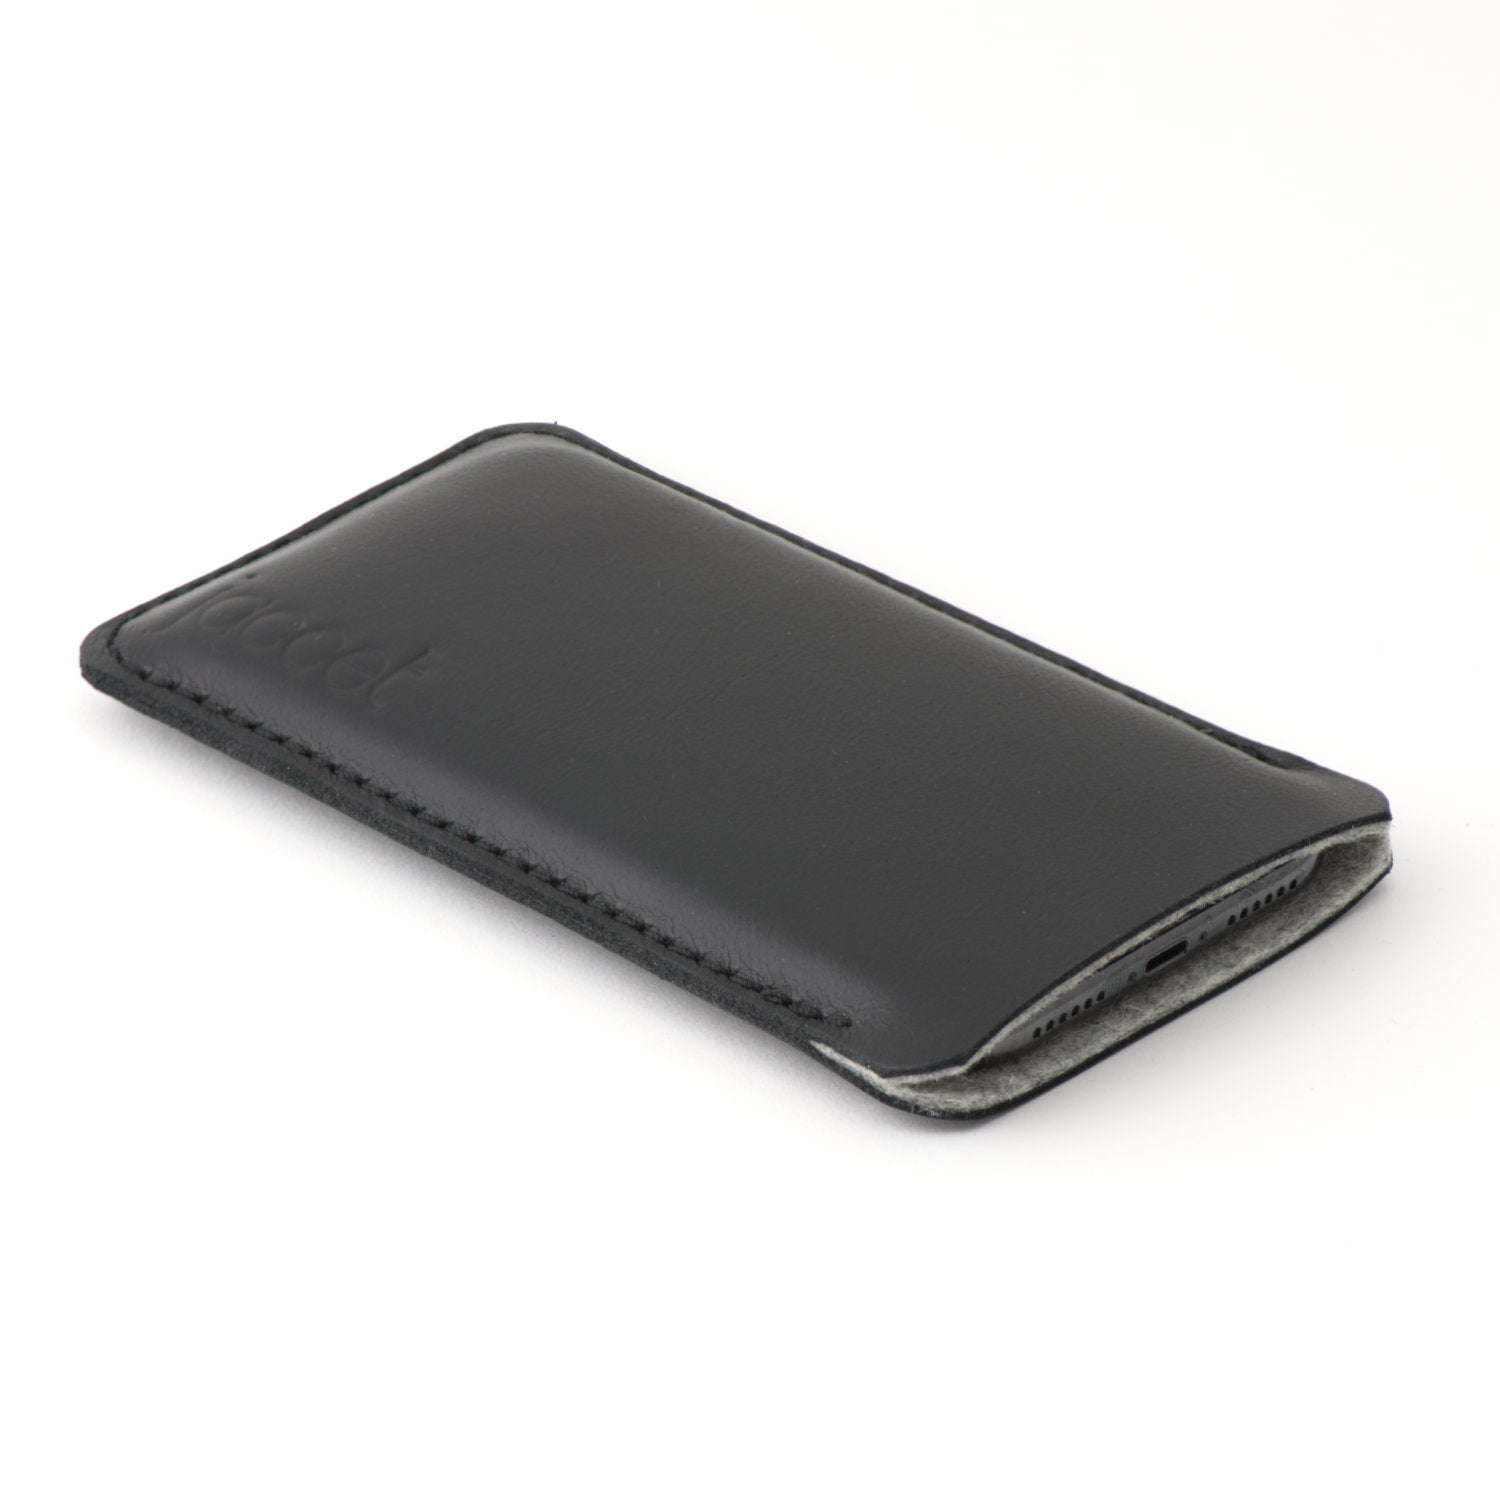 Full-grain leather Sony Xperia sleeve - Black leather with grey wolvilt - 100% handmade